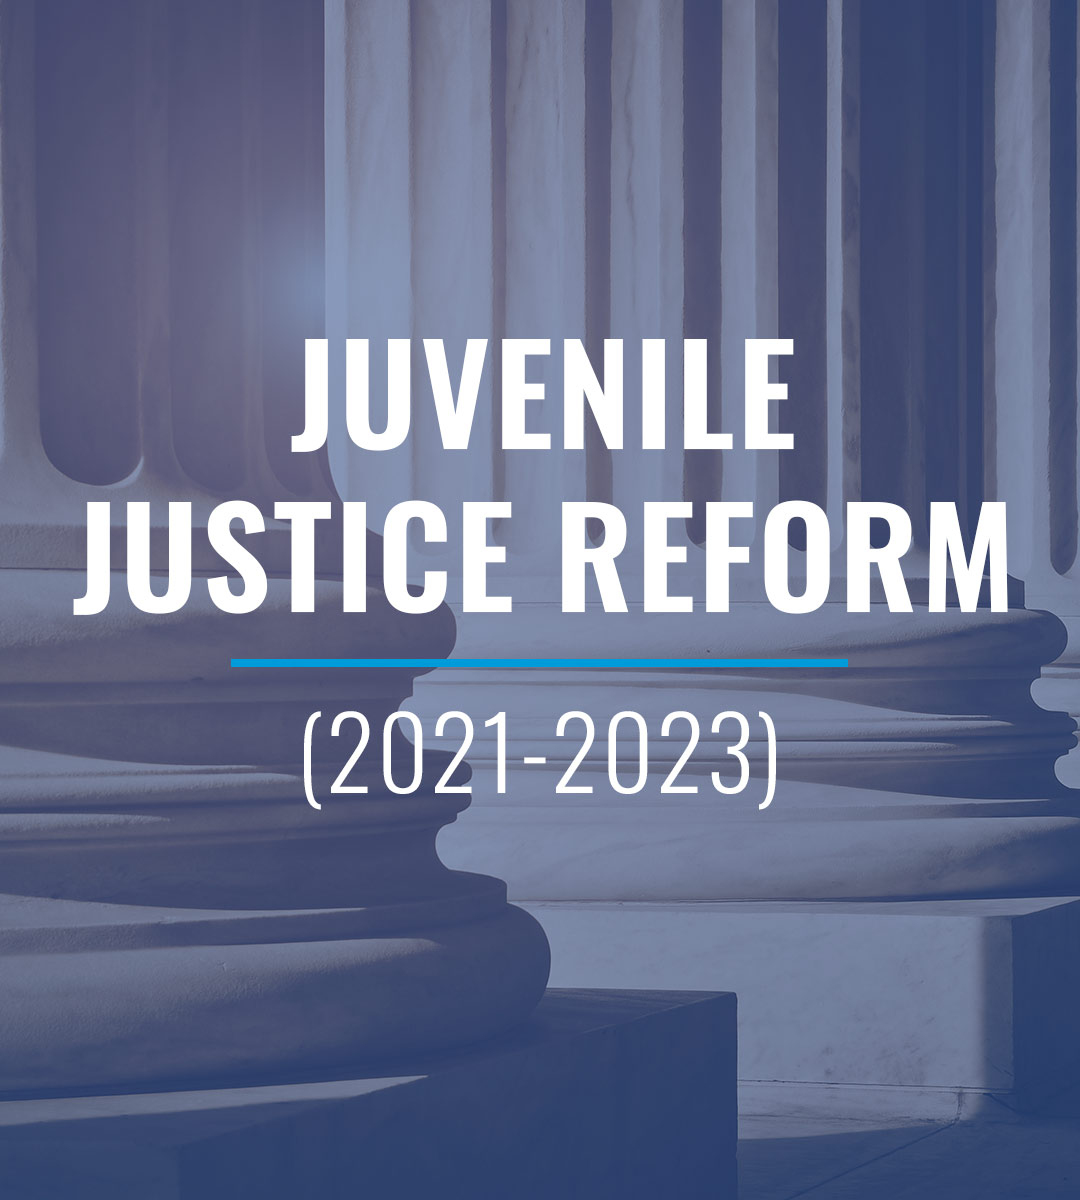 Juvenile Justice Reform